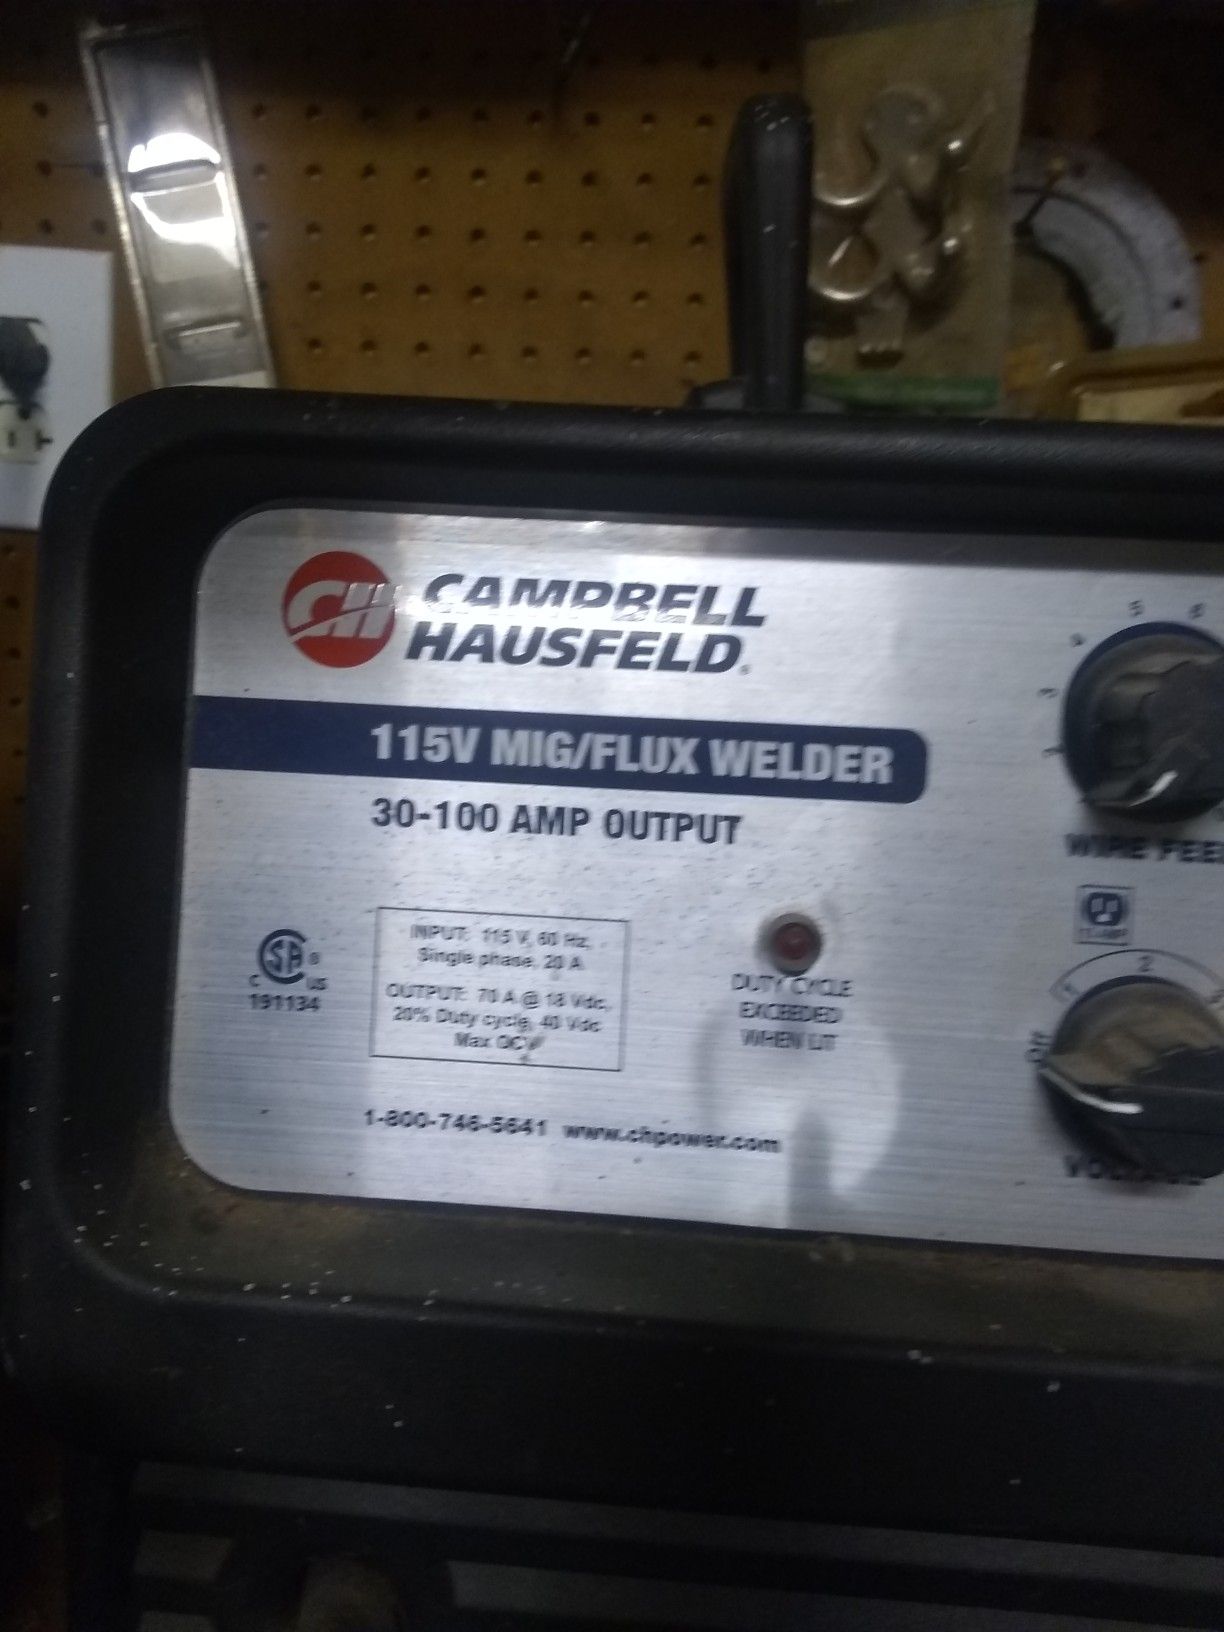 Campbell hausfeld welder 115v flux welder 30 100amp output